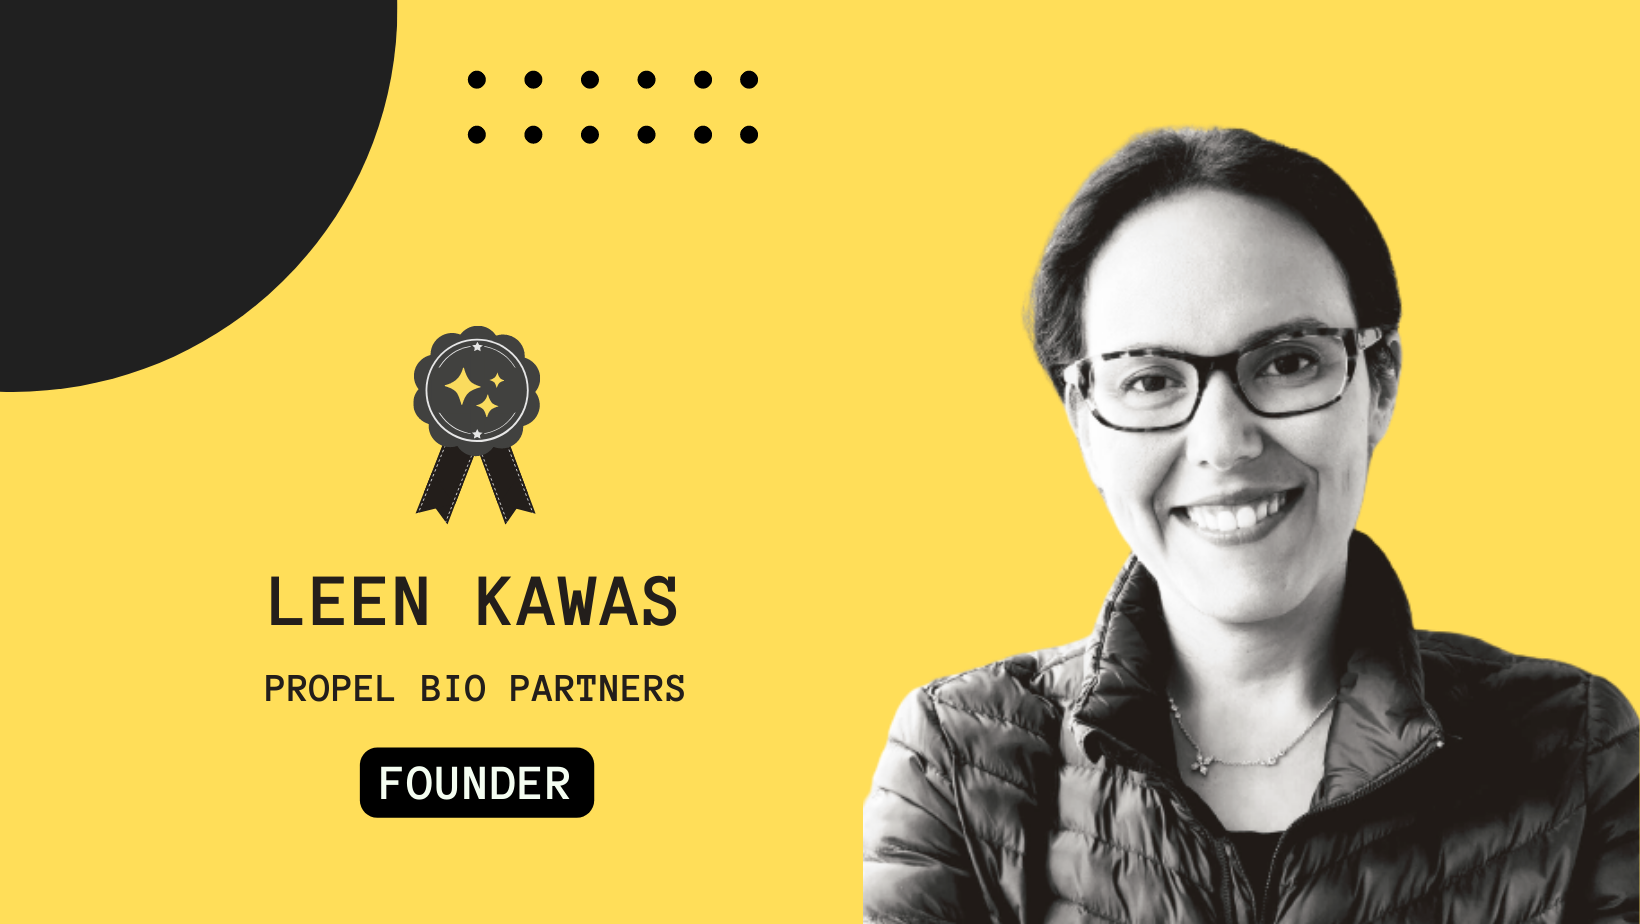 Meet Leen Kawas, Founder of Propel Bio Partners